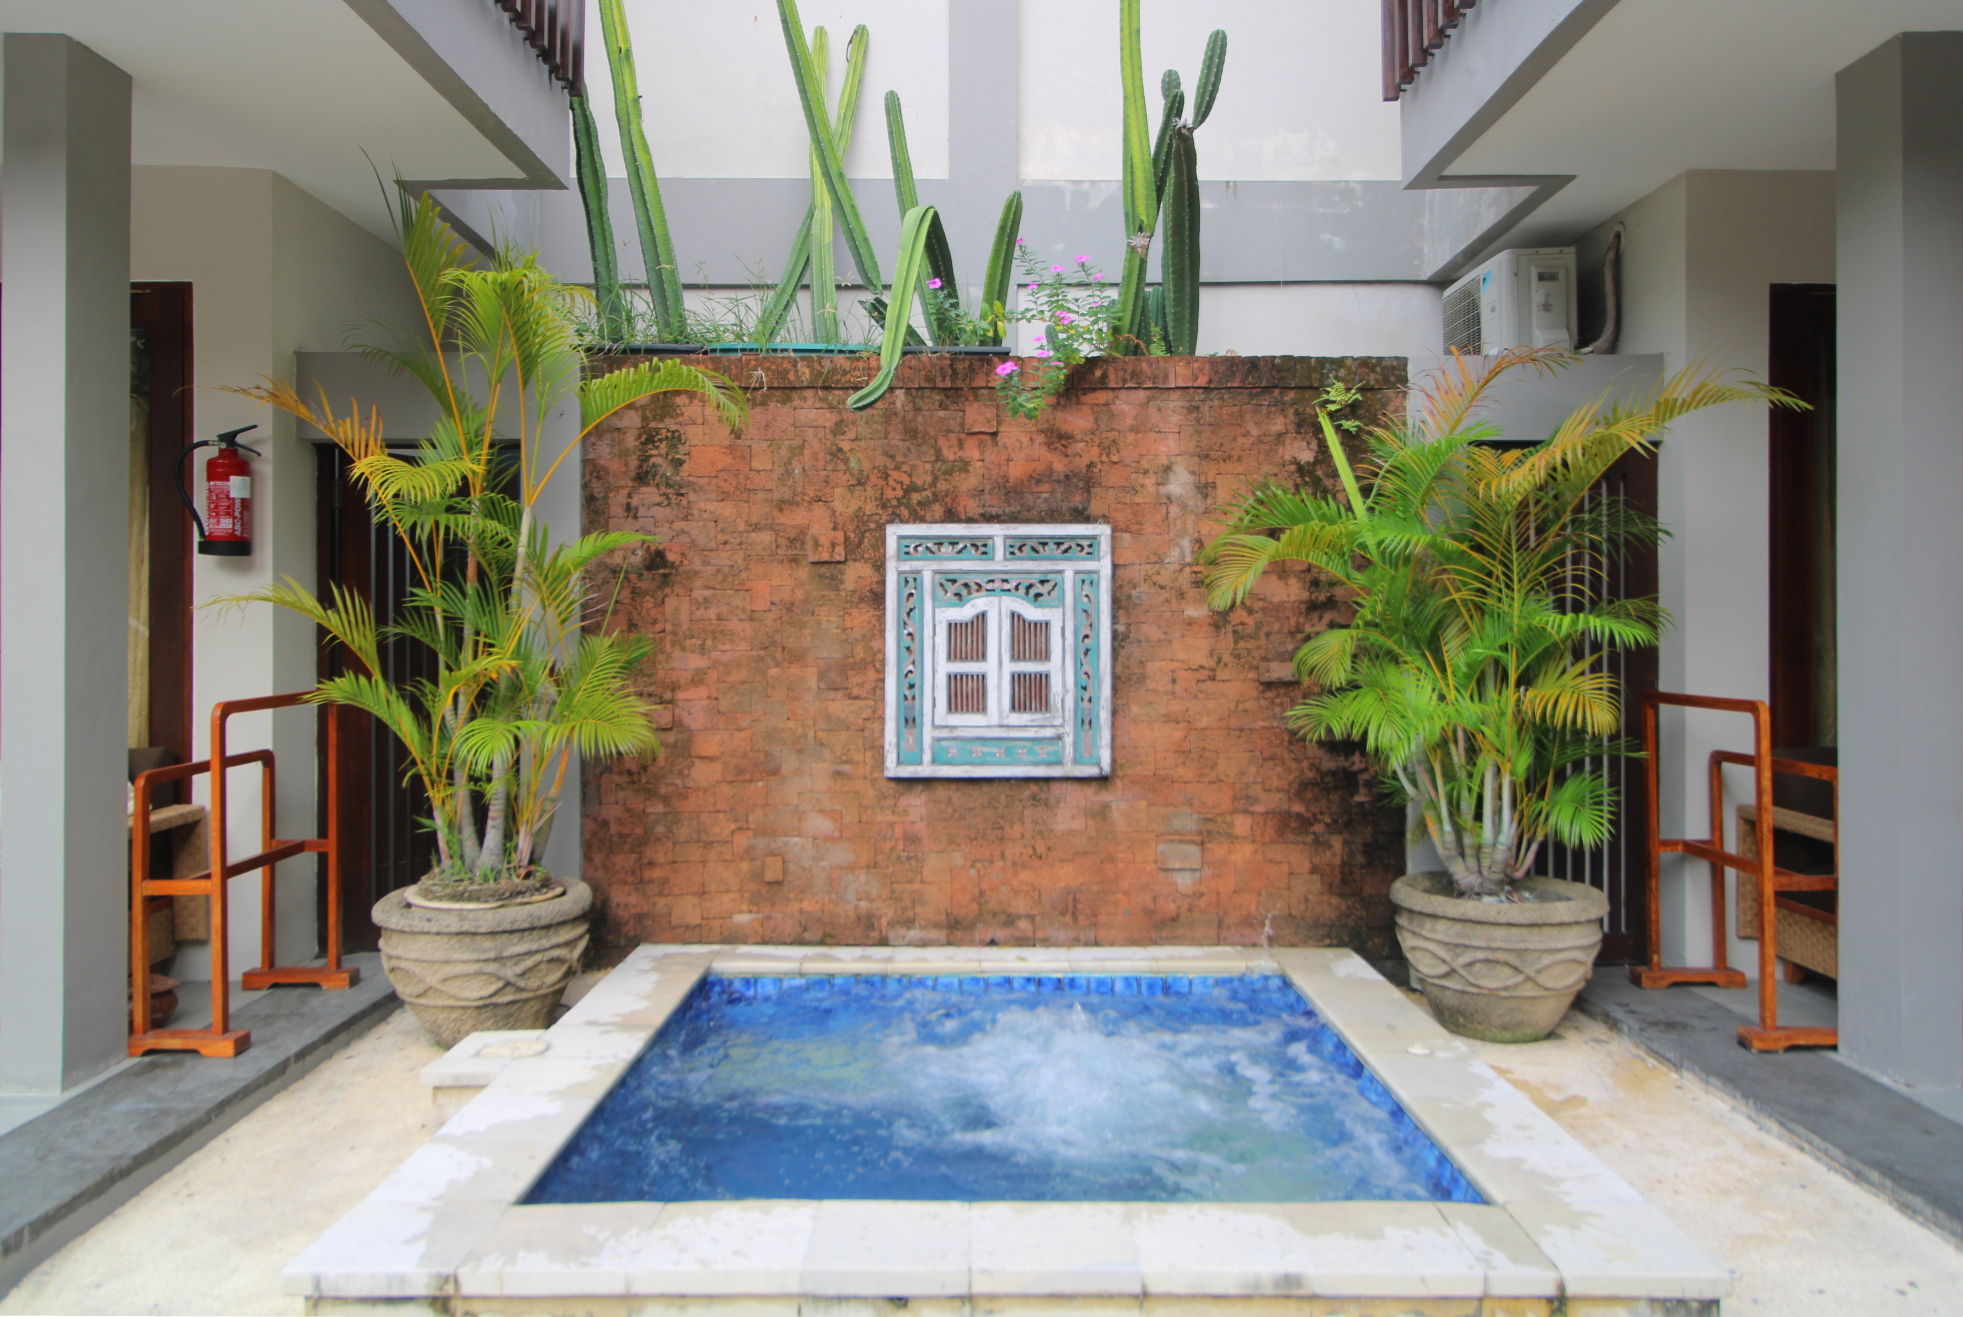 rama garden hotel facilities - jacuzzi